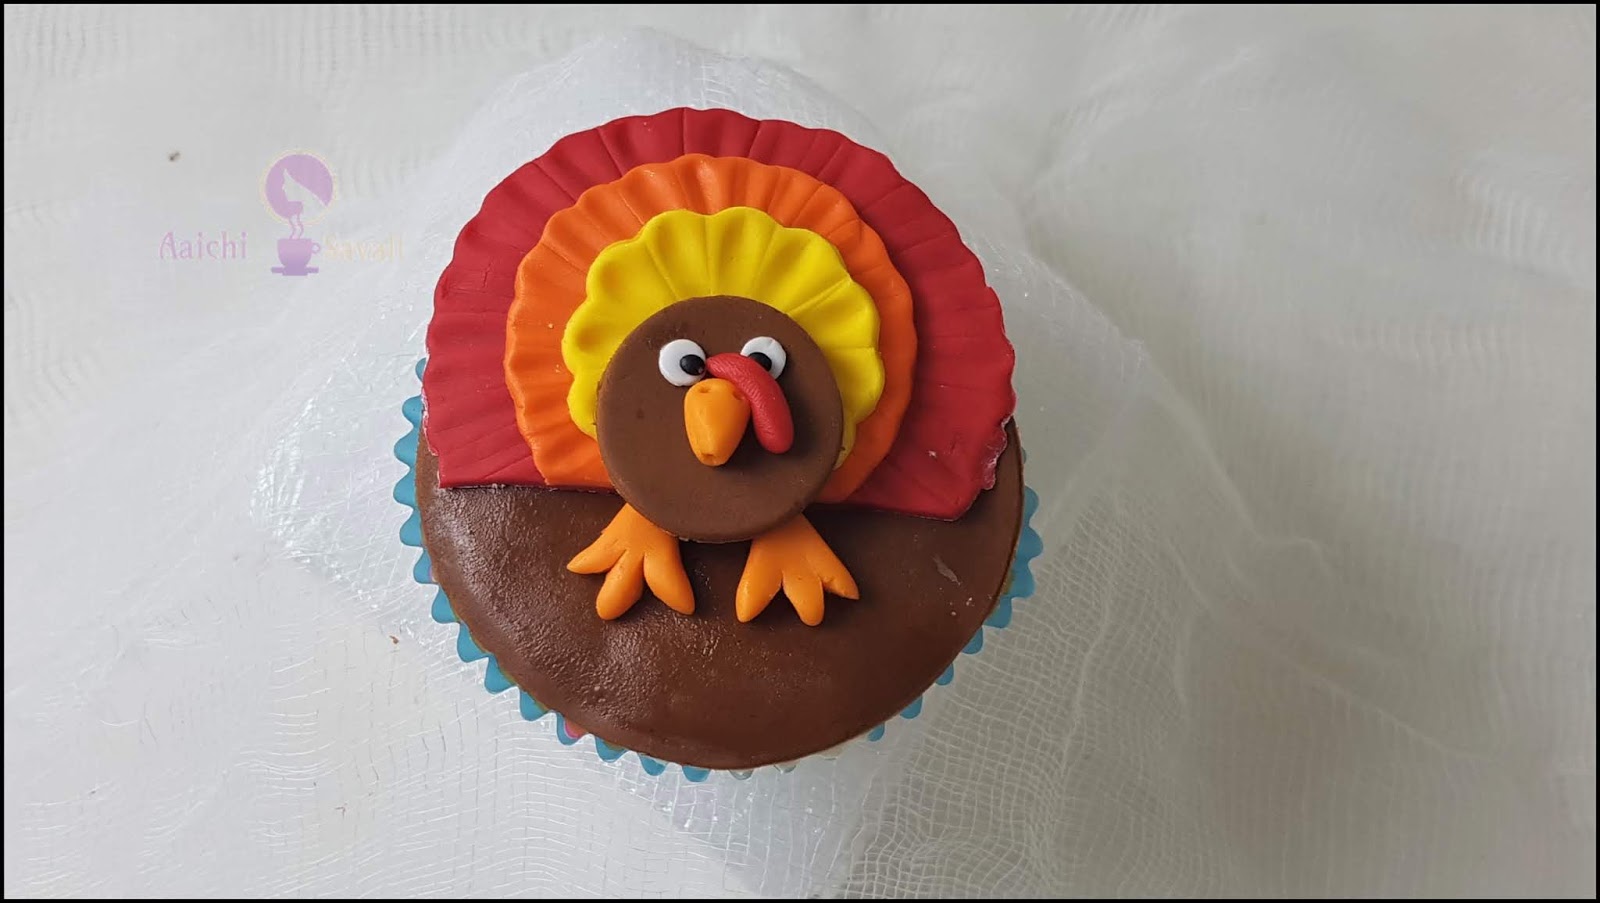 Thanksgiving Owl and Turkey Fondant Cupcake Tutorial - Aaichi Savali